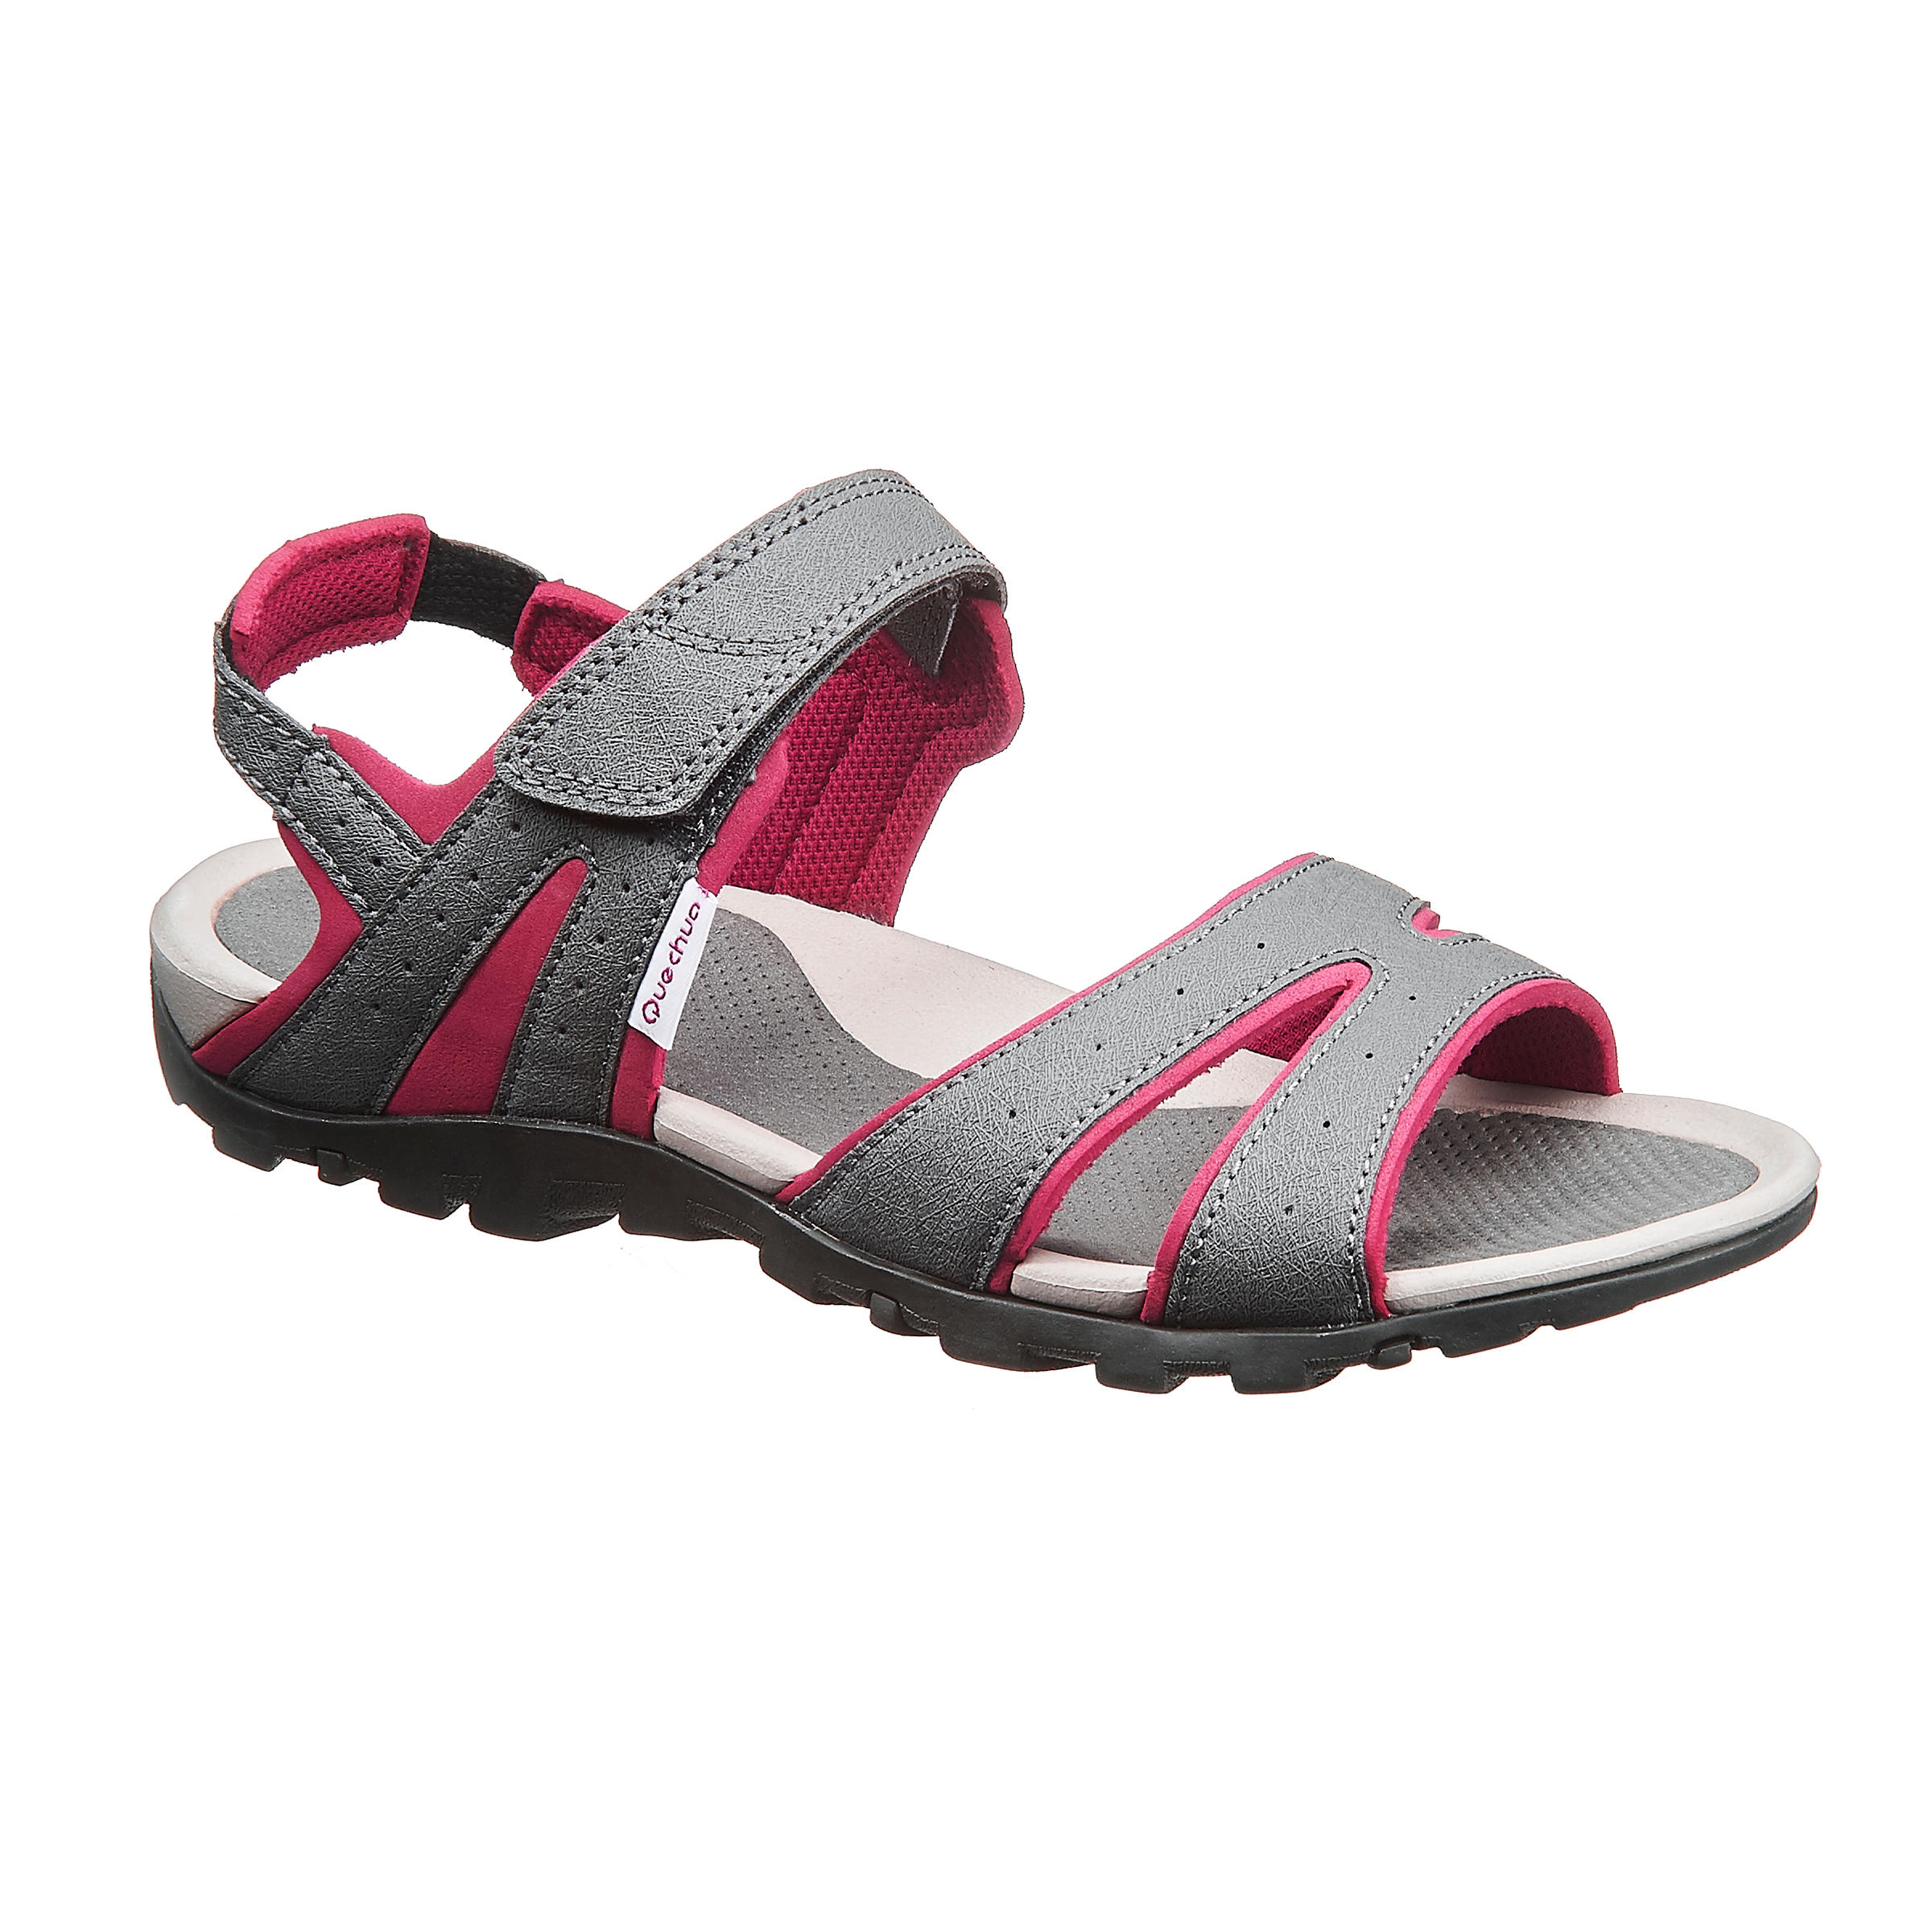 Women's Hiking Arpenaz 50 Sandals - Pink